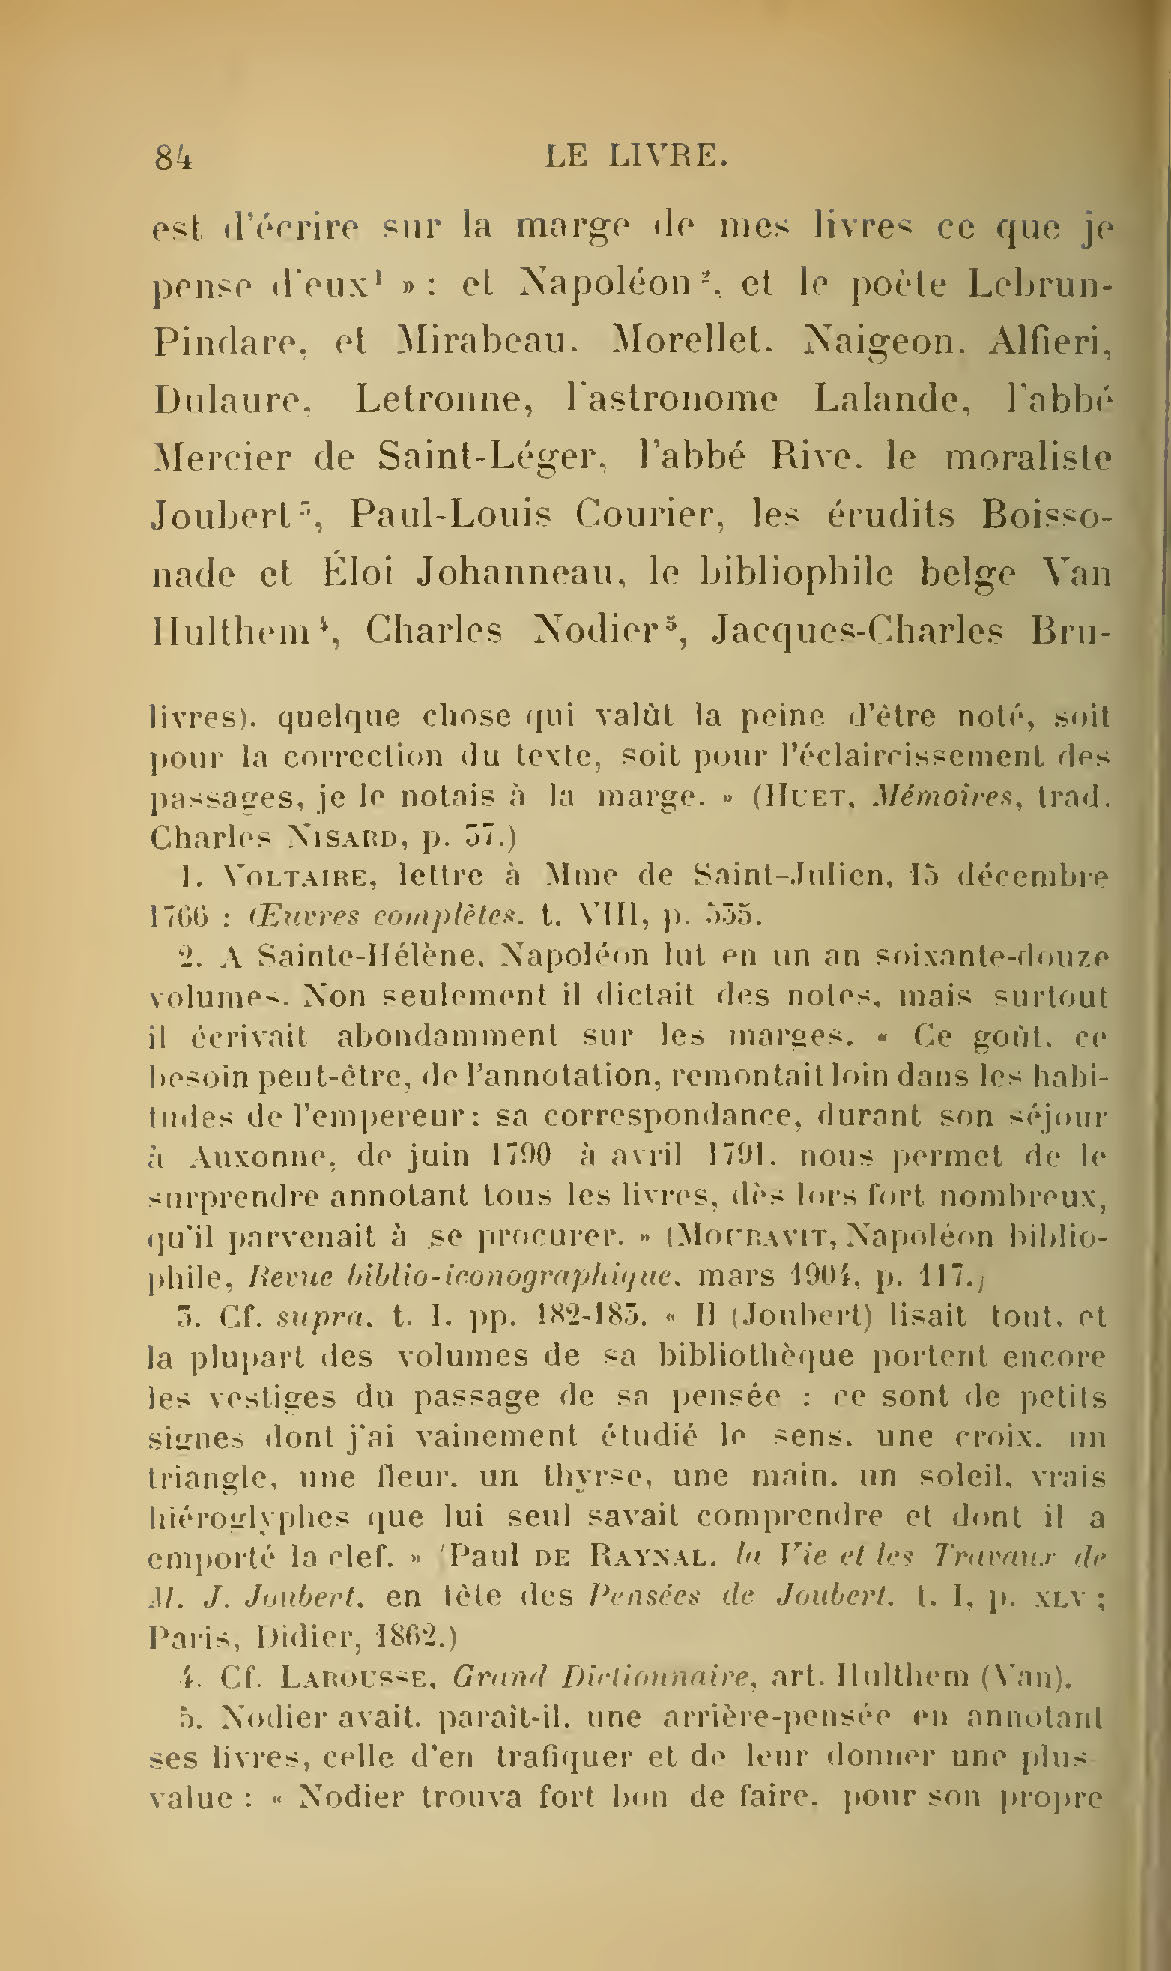 Albert Cim, Le Livre, t. II, p. 084.